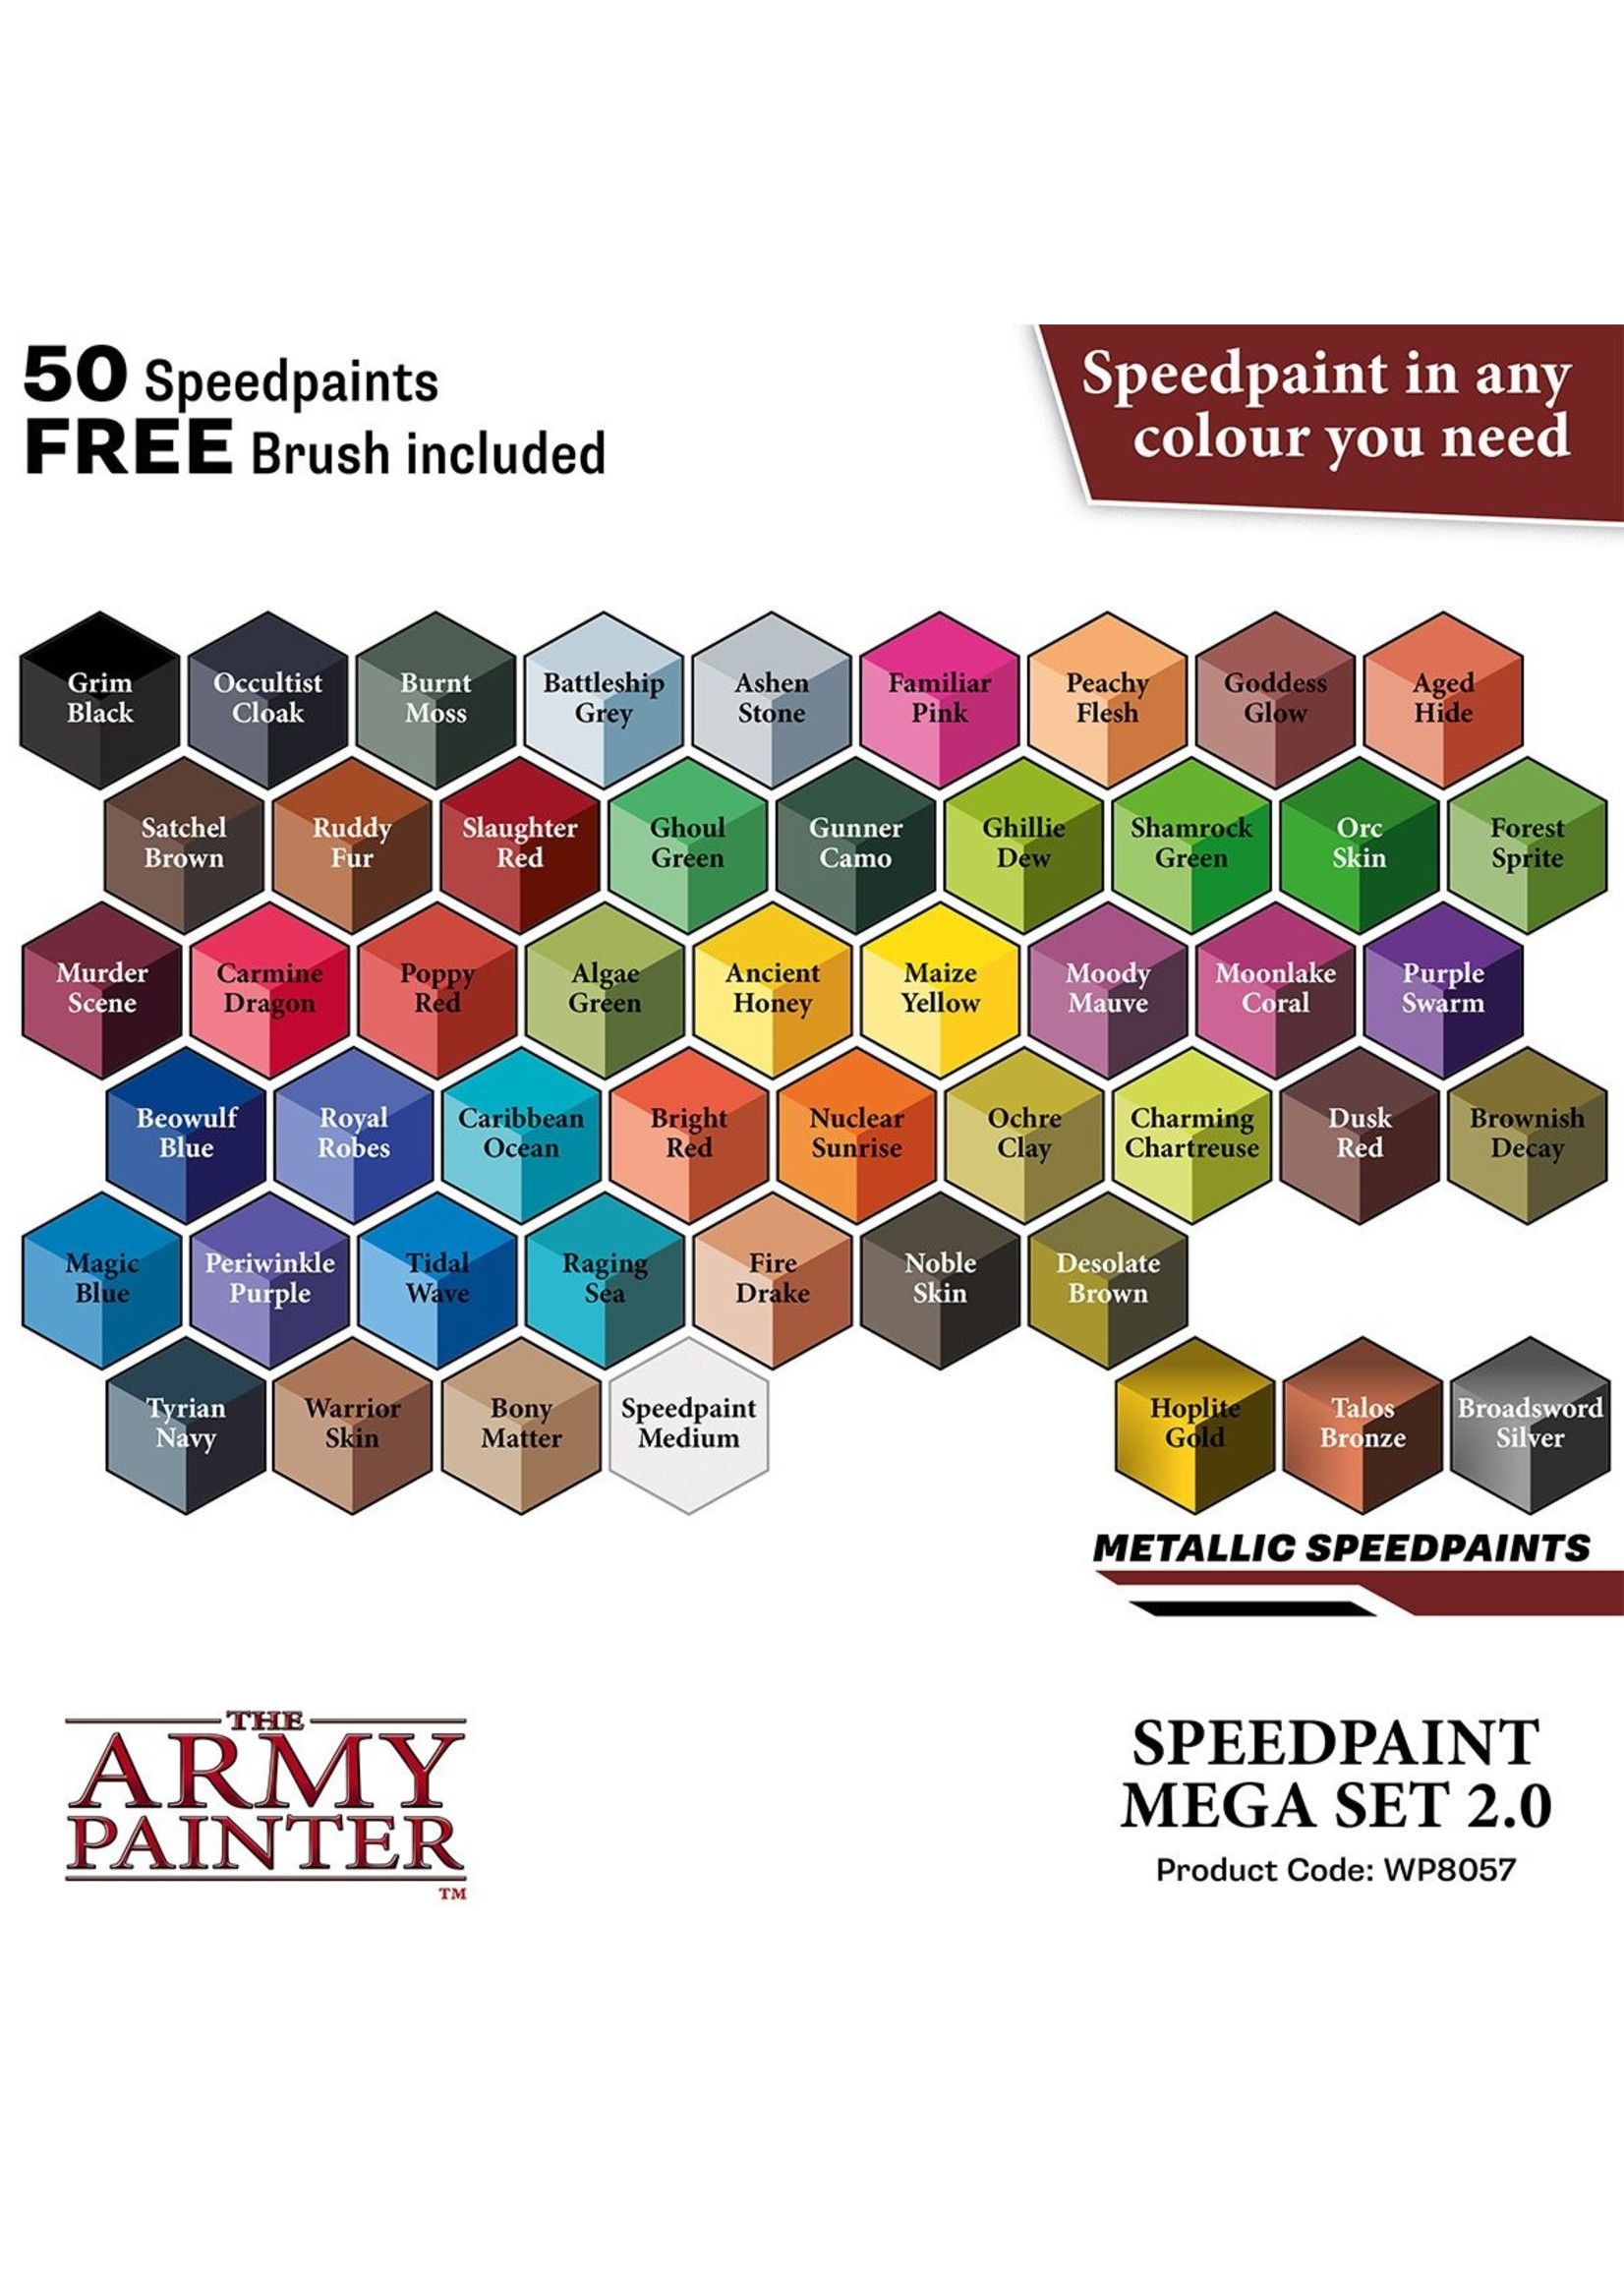 The Army Painter WP8057 - Speedpaint Mega Set 2.0